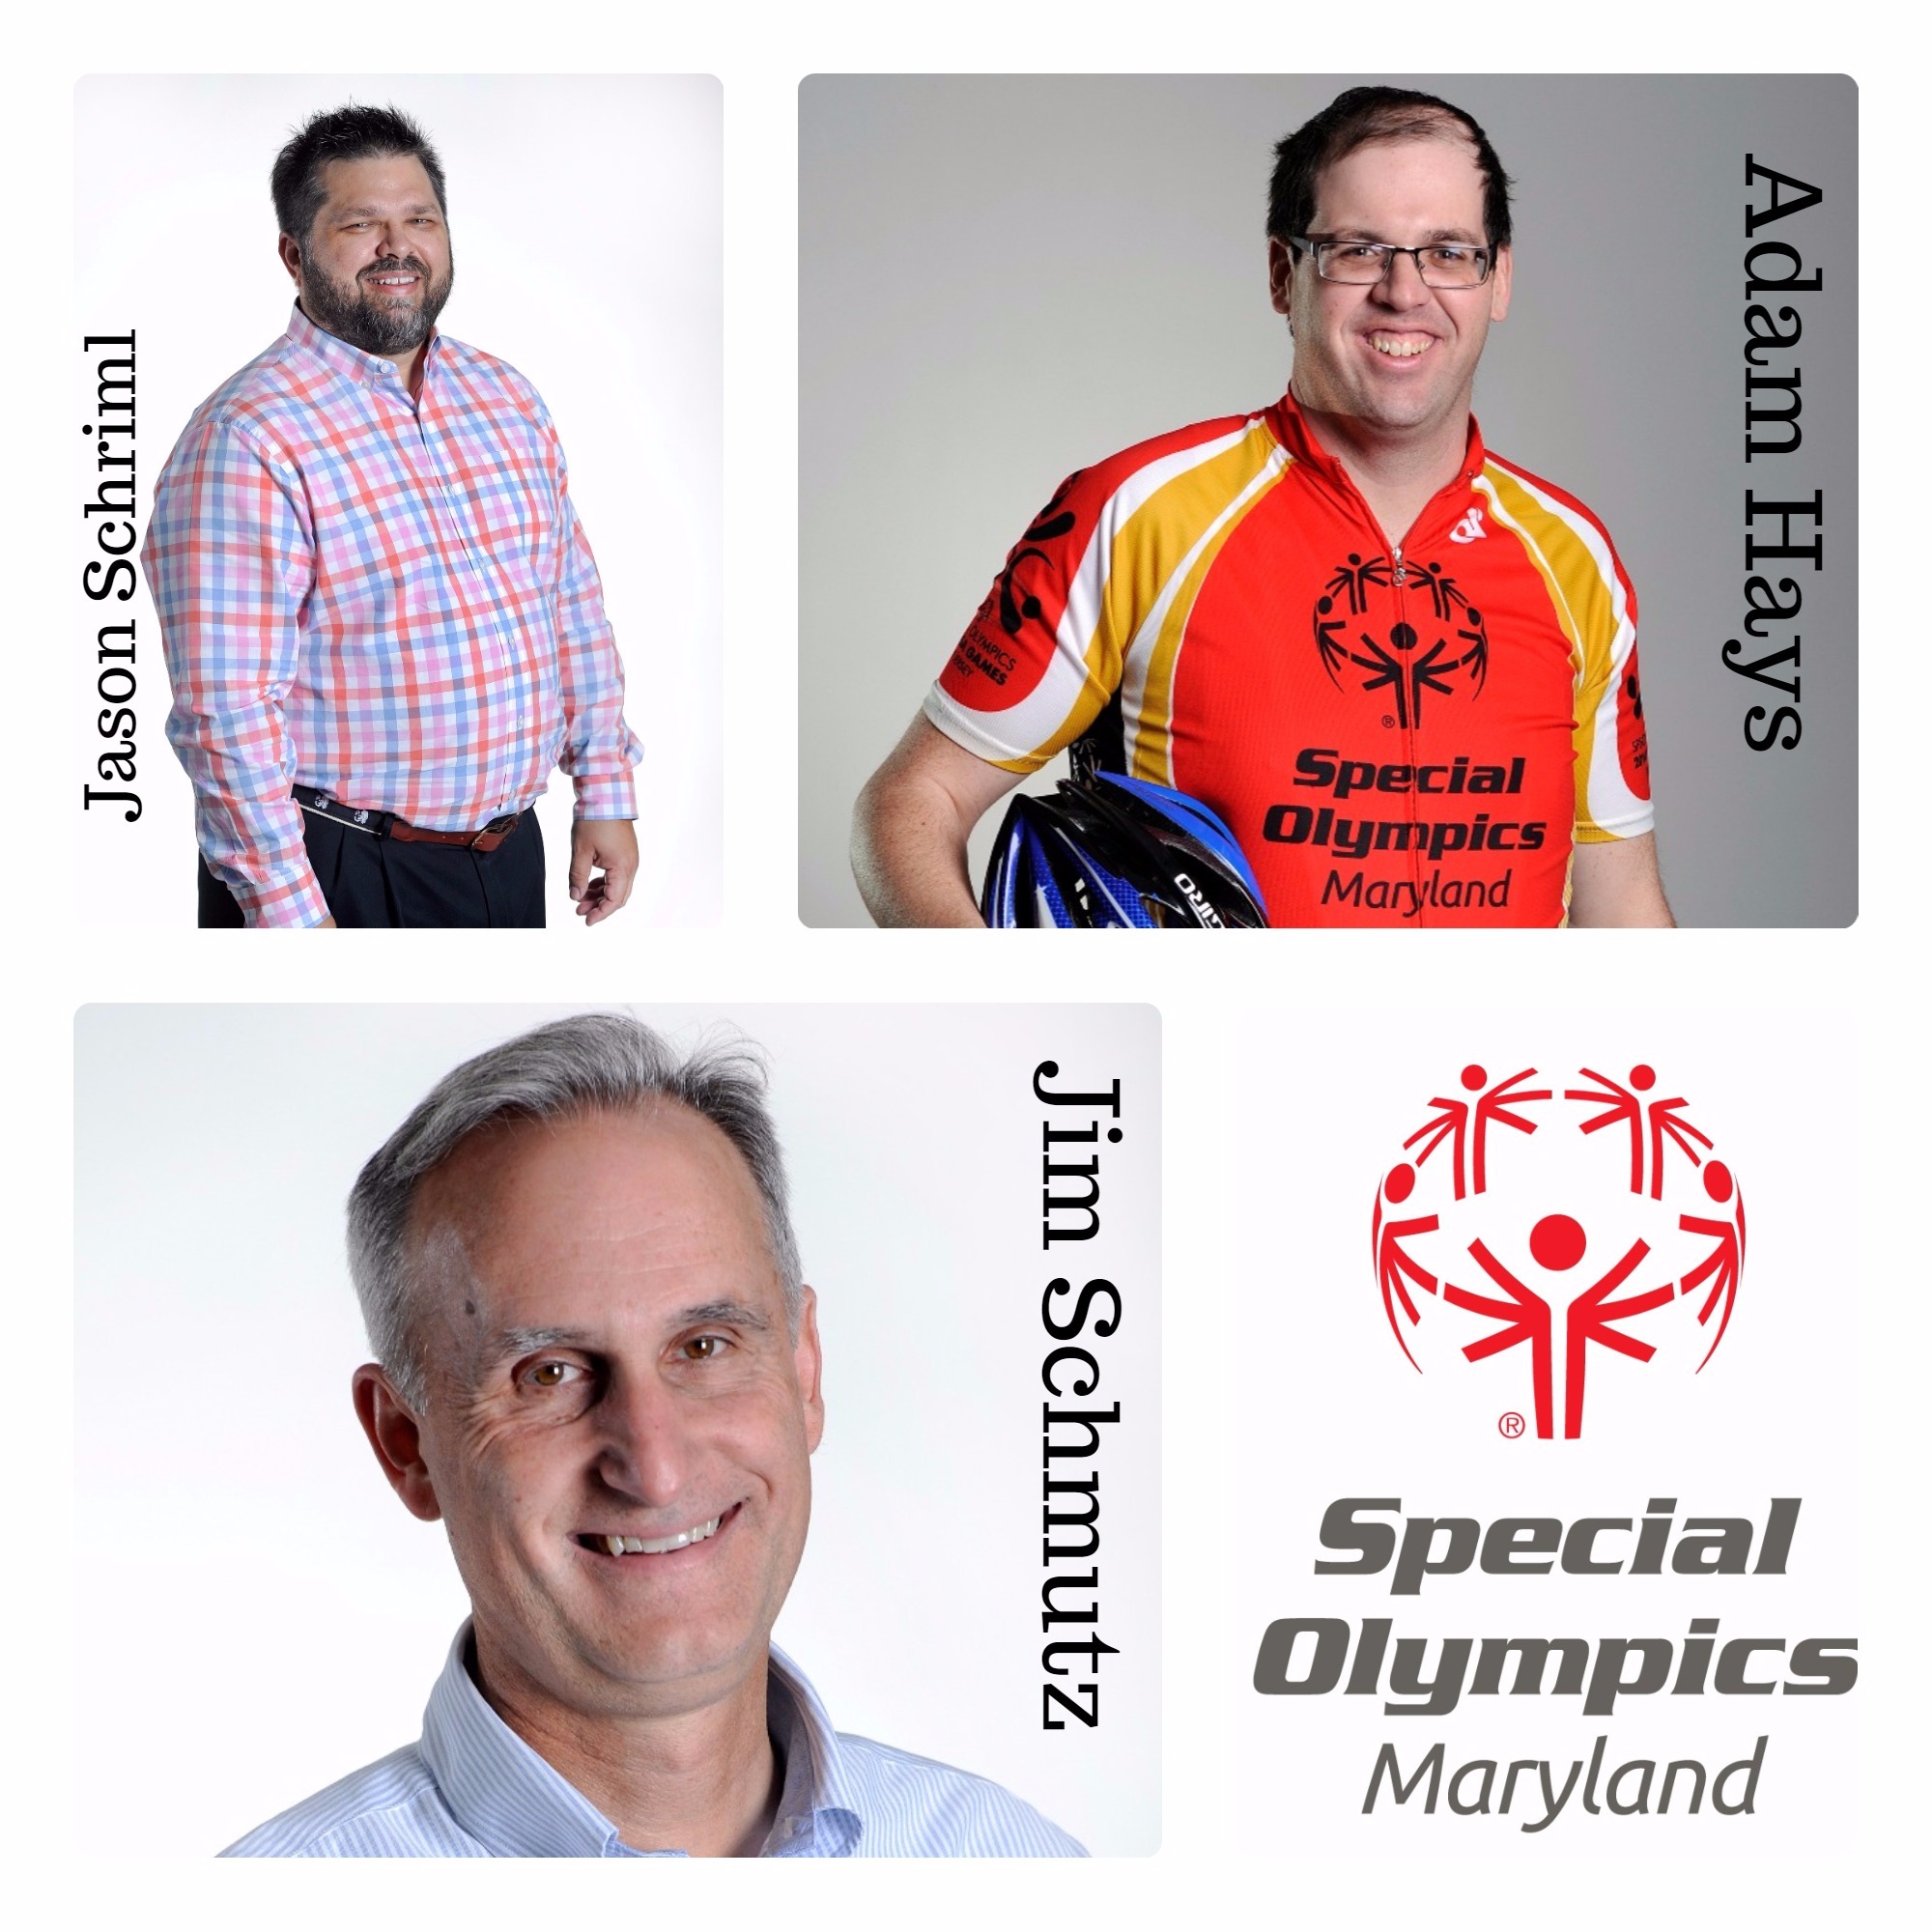 Speical Olympics Maryland Internships